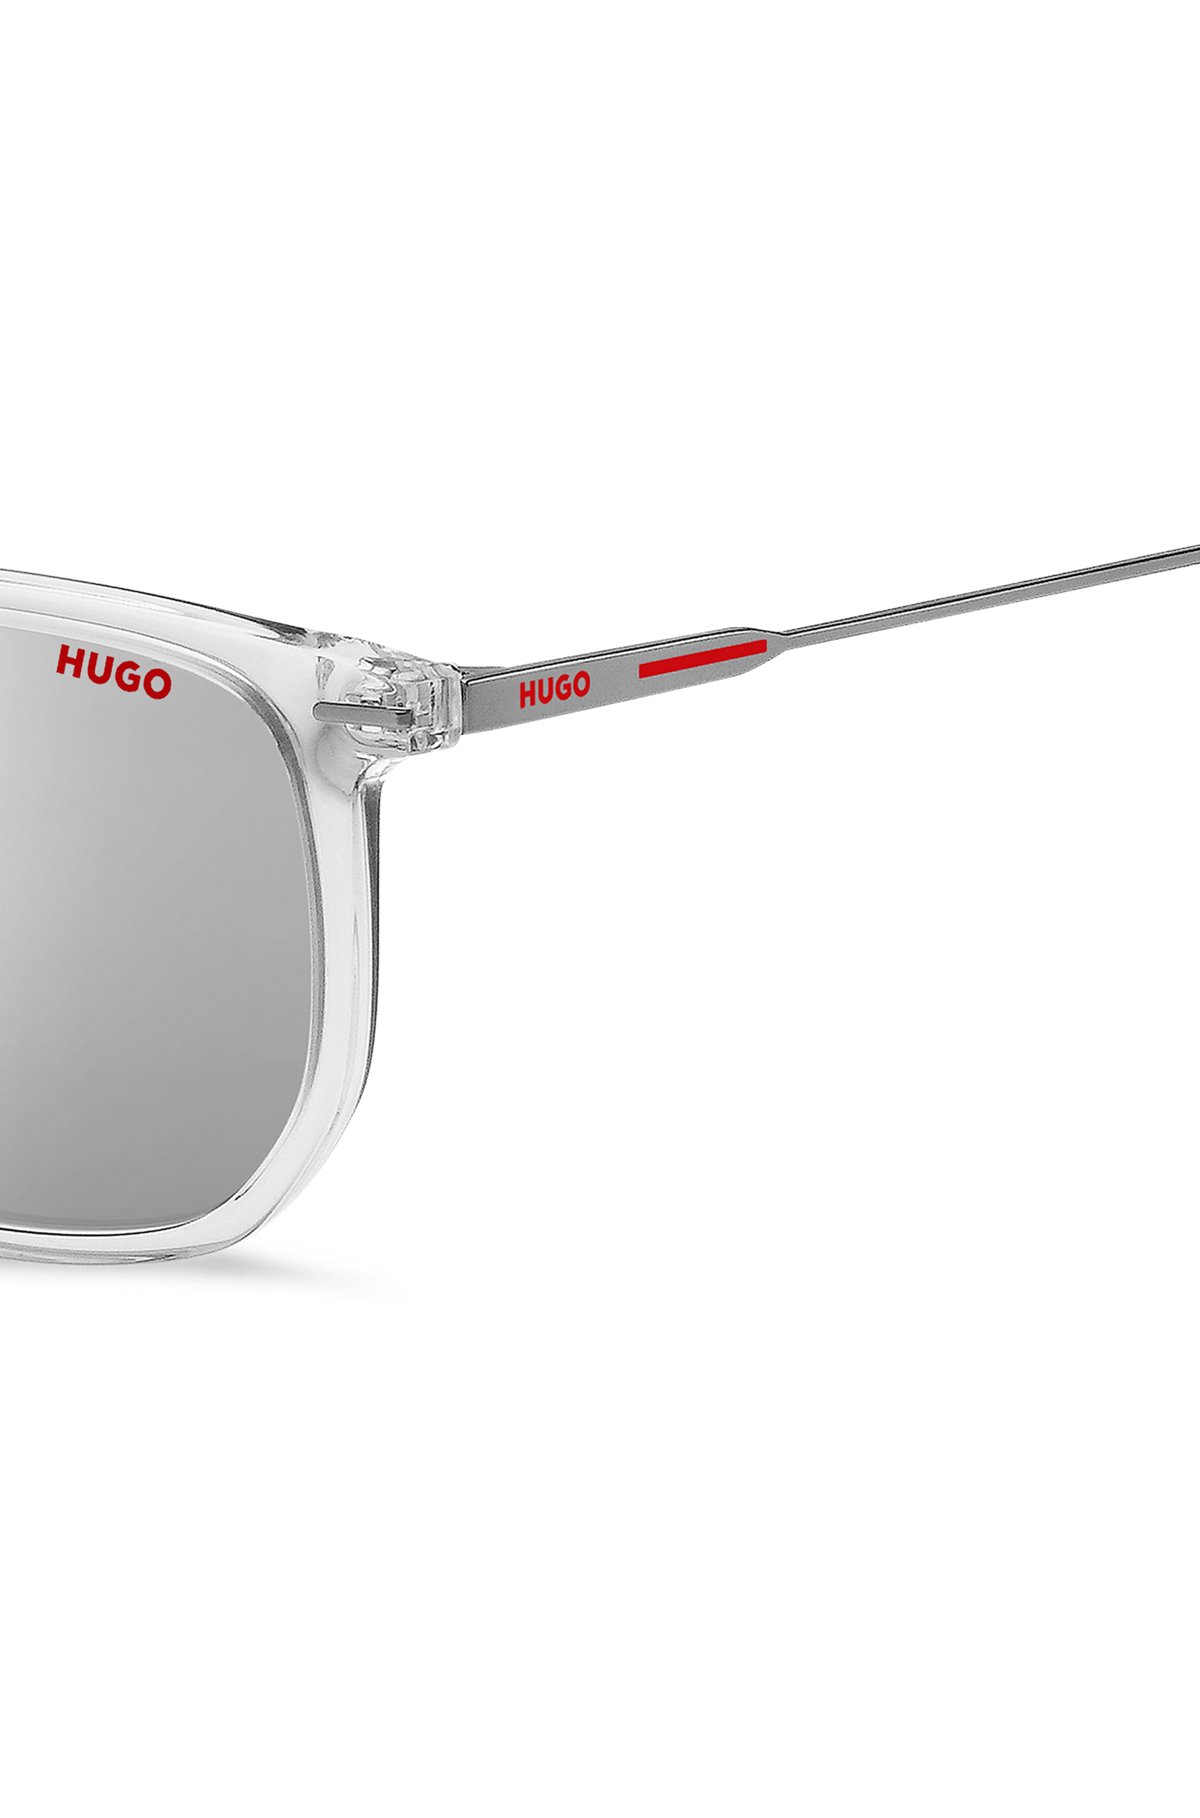 HUGO - Transparent-acetate sunglasses with red details